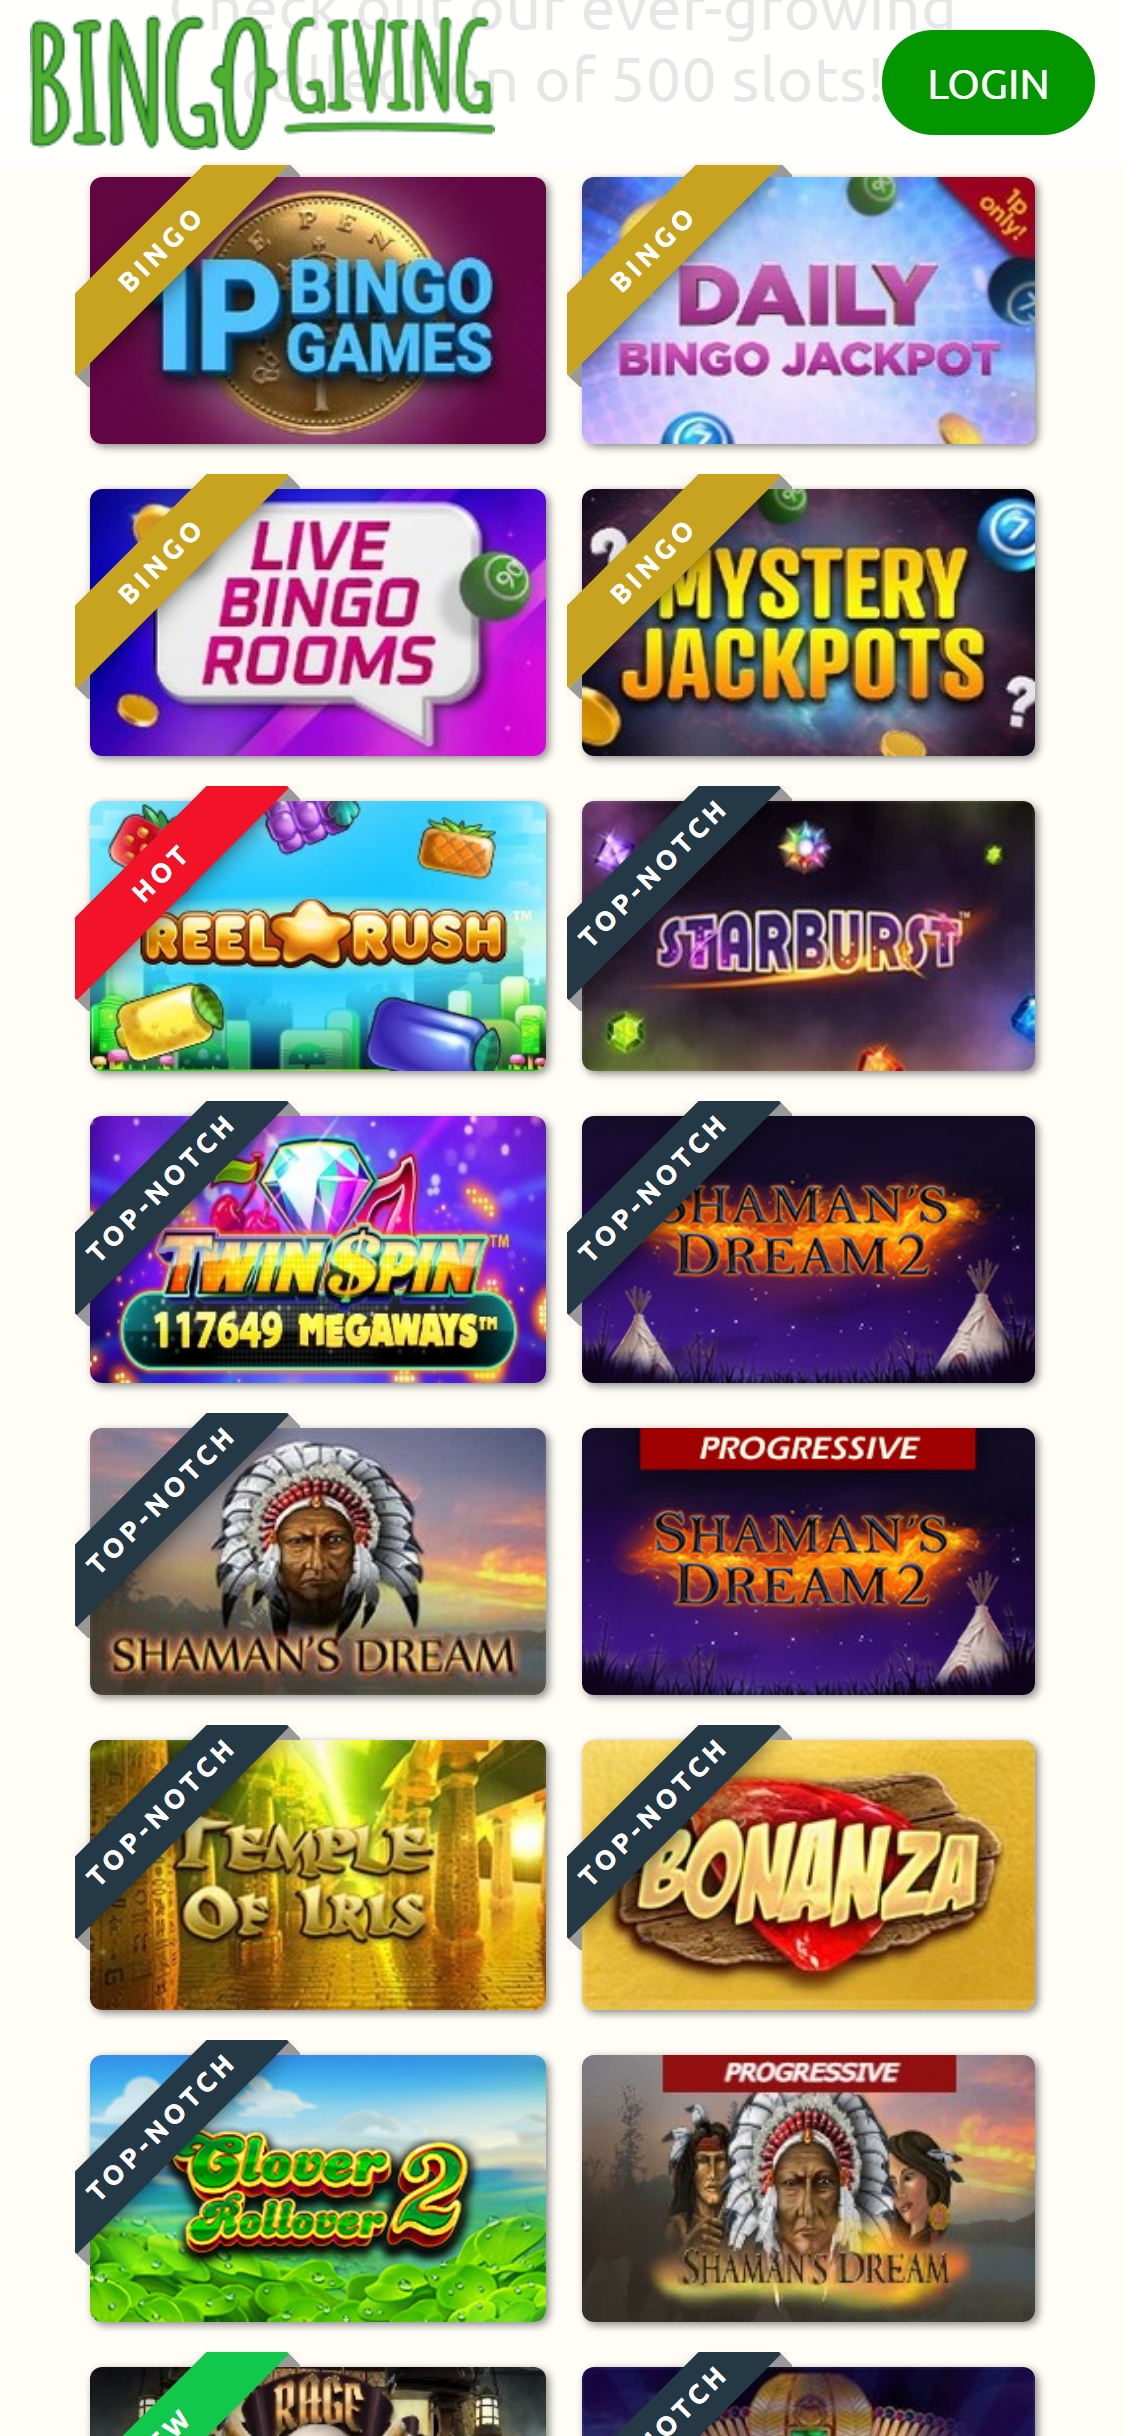 Bingo Giving Casino Mobile Games Review